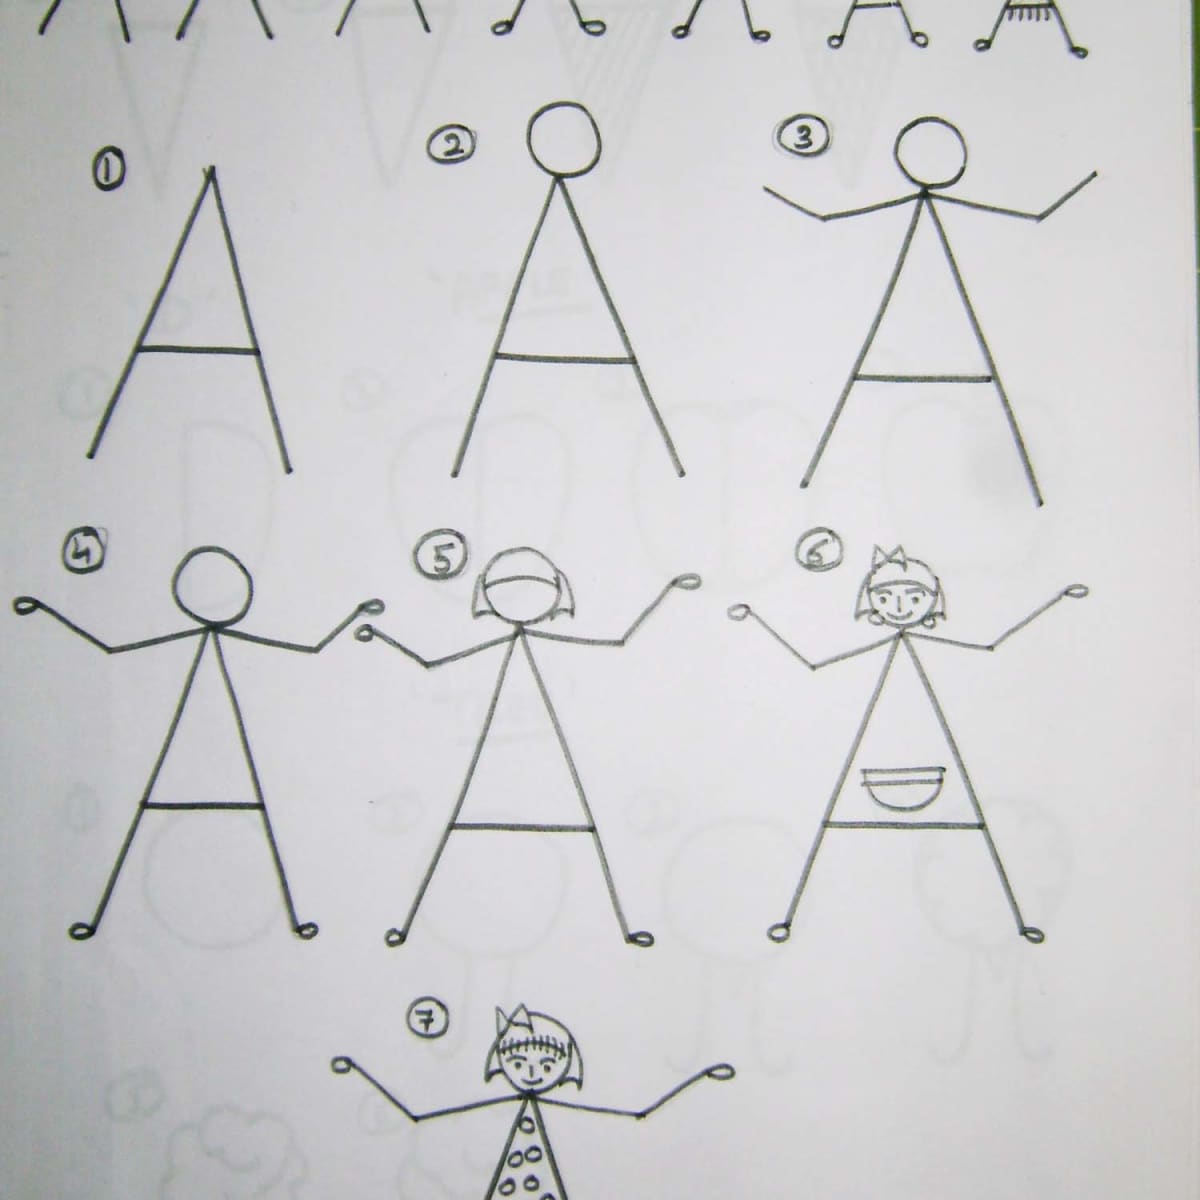 Simple Drawing Ideas For Kids | Easy drawings, Drawings, Kids-nextbuild.com.vn